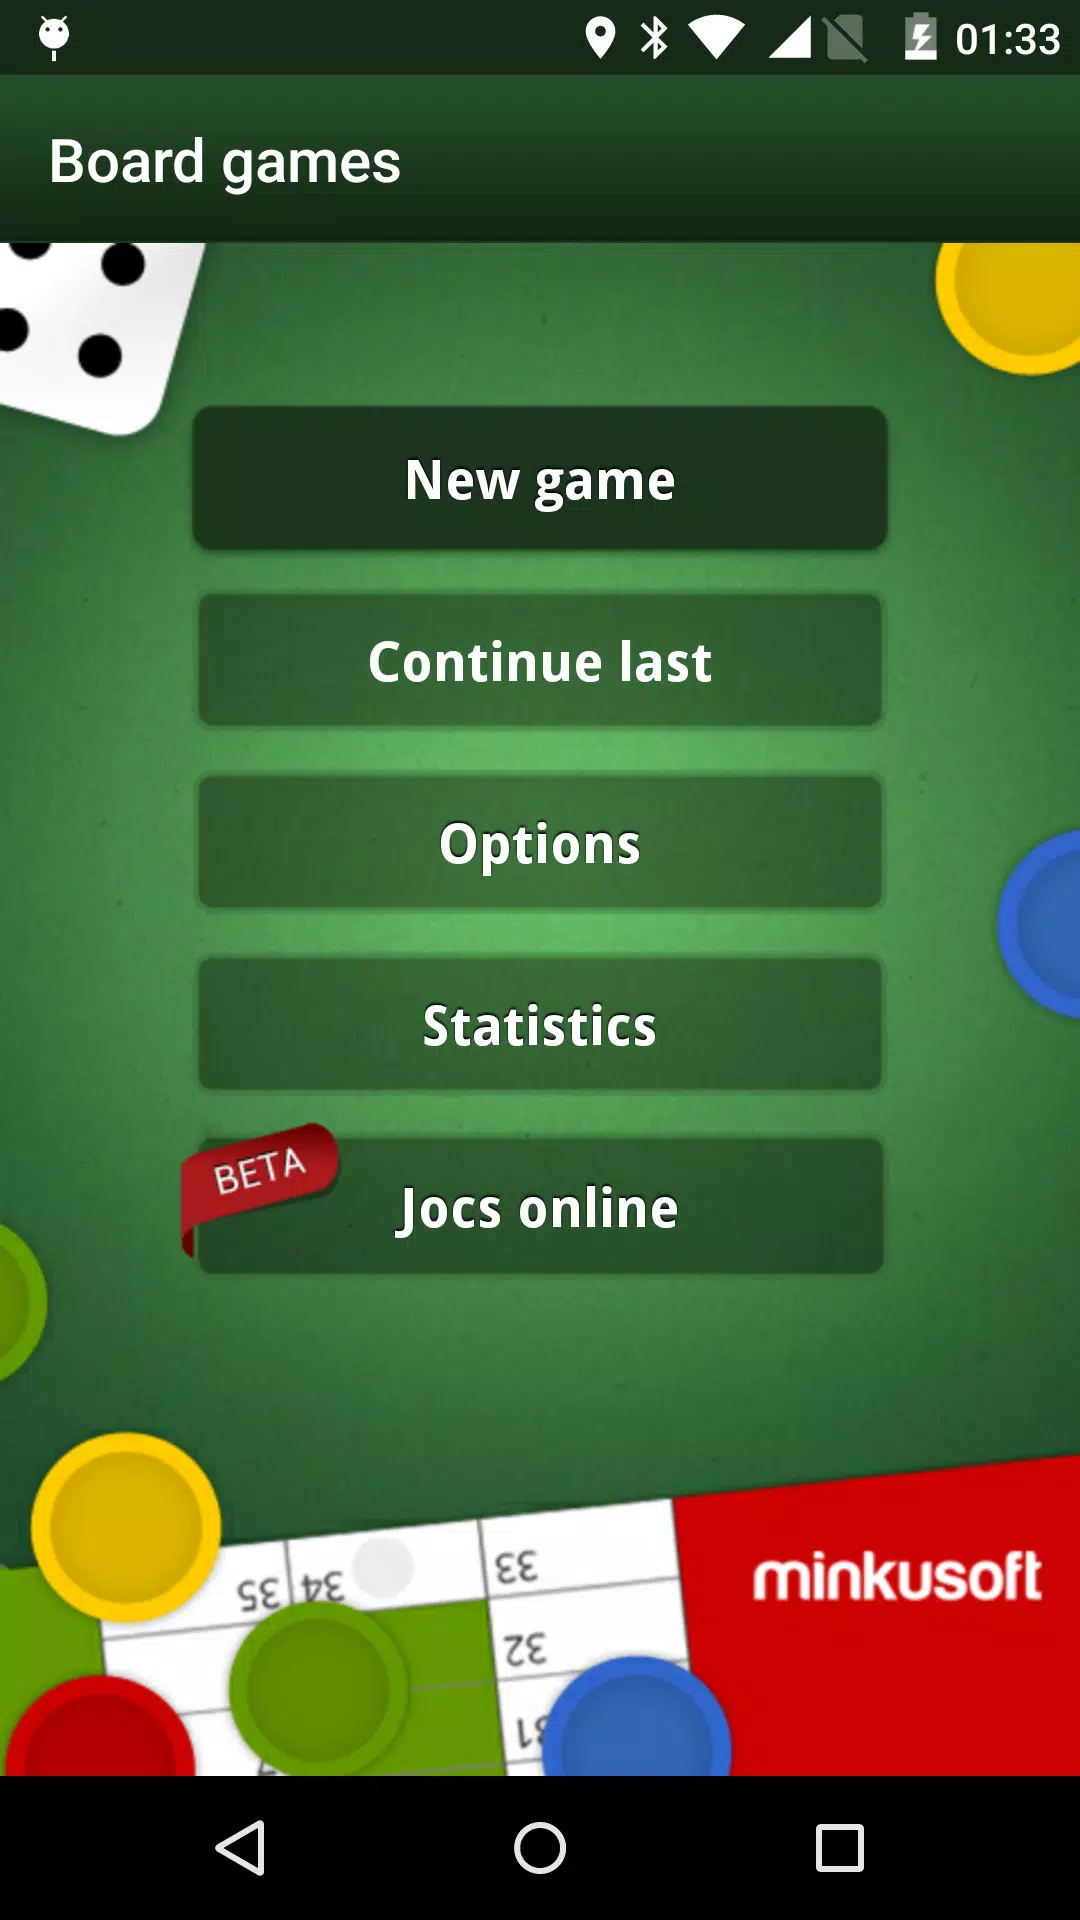 Download do APK de Jogos de Tabuleiro Clássicos para Android